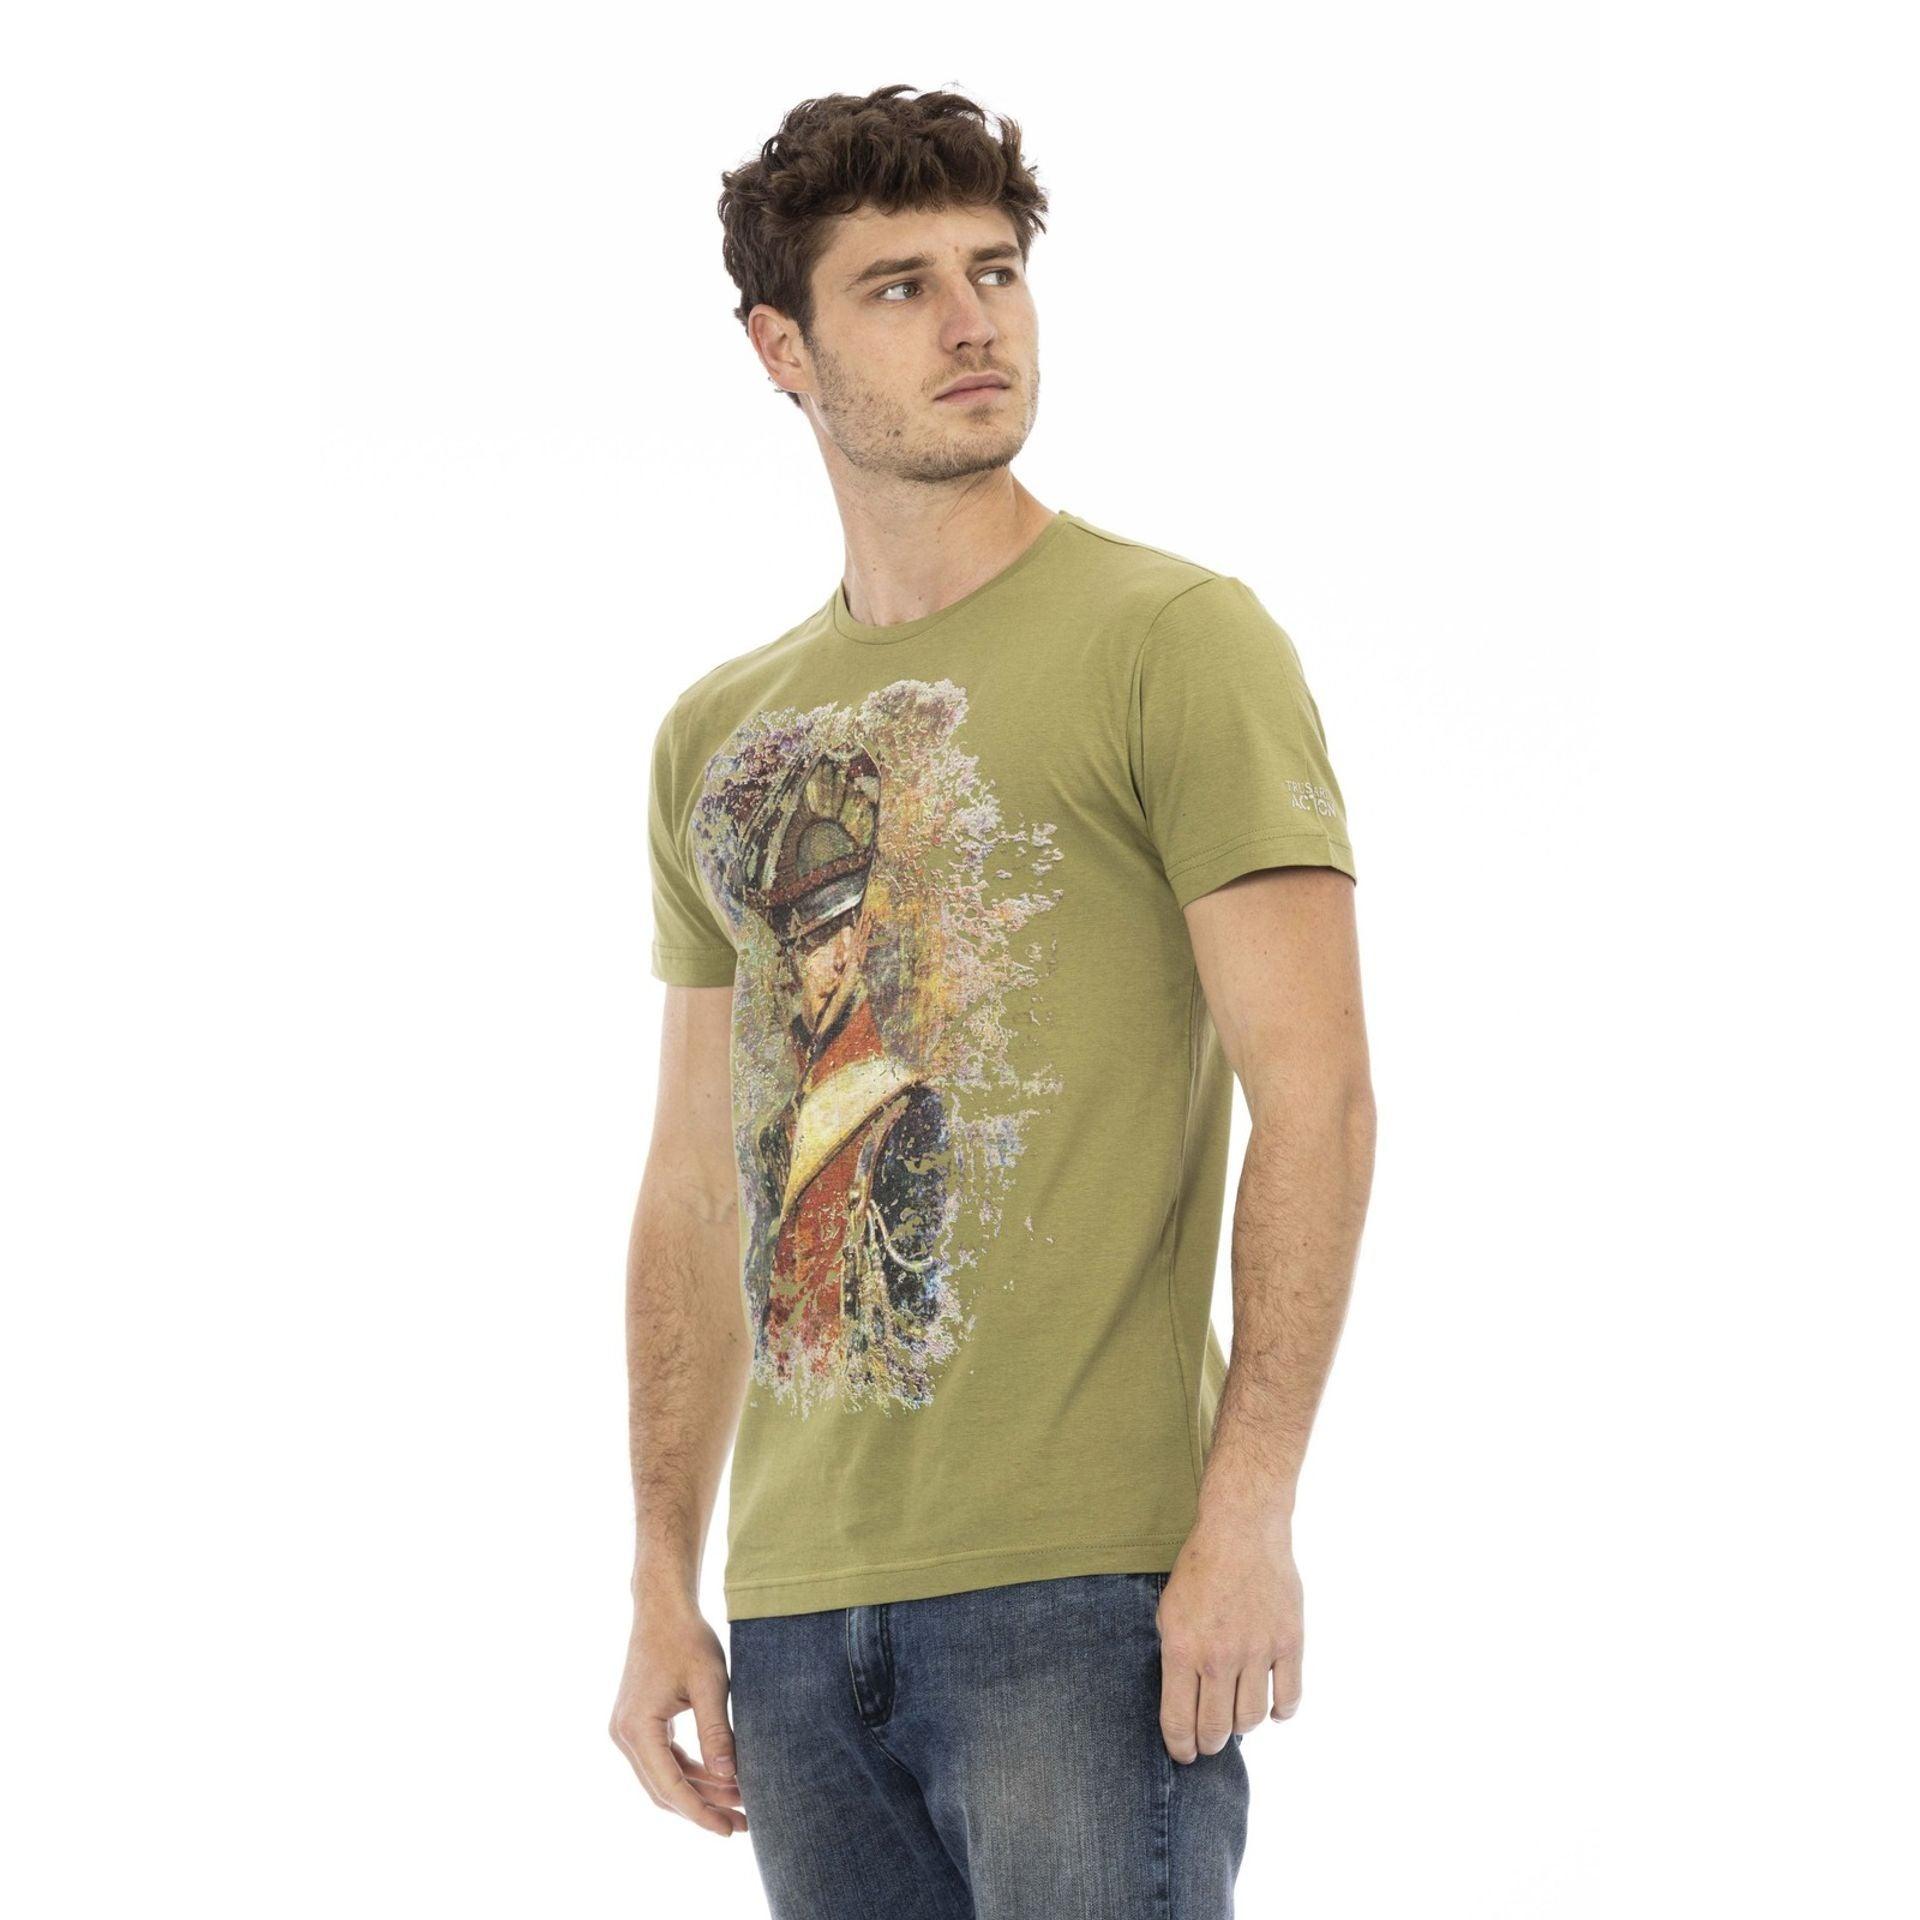 Trussardi Action Men T-shirts - Green Brand T-shirts - T-Shirt - Guocali